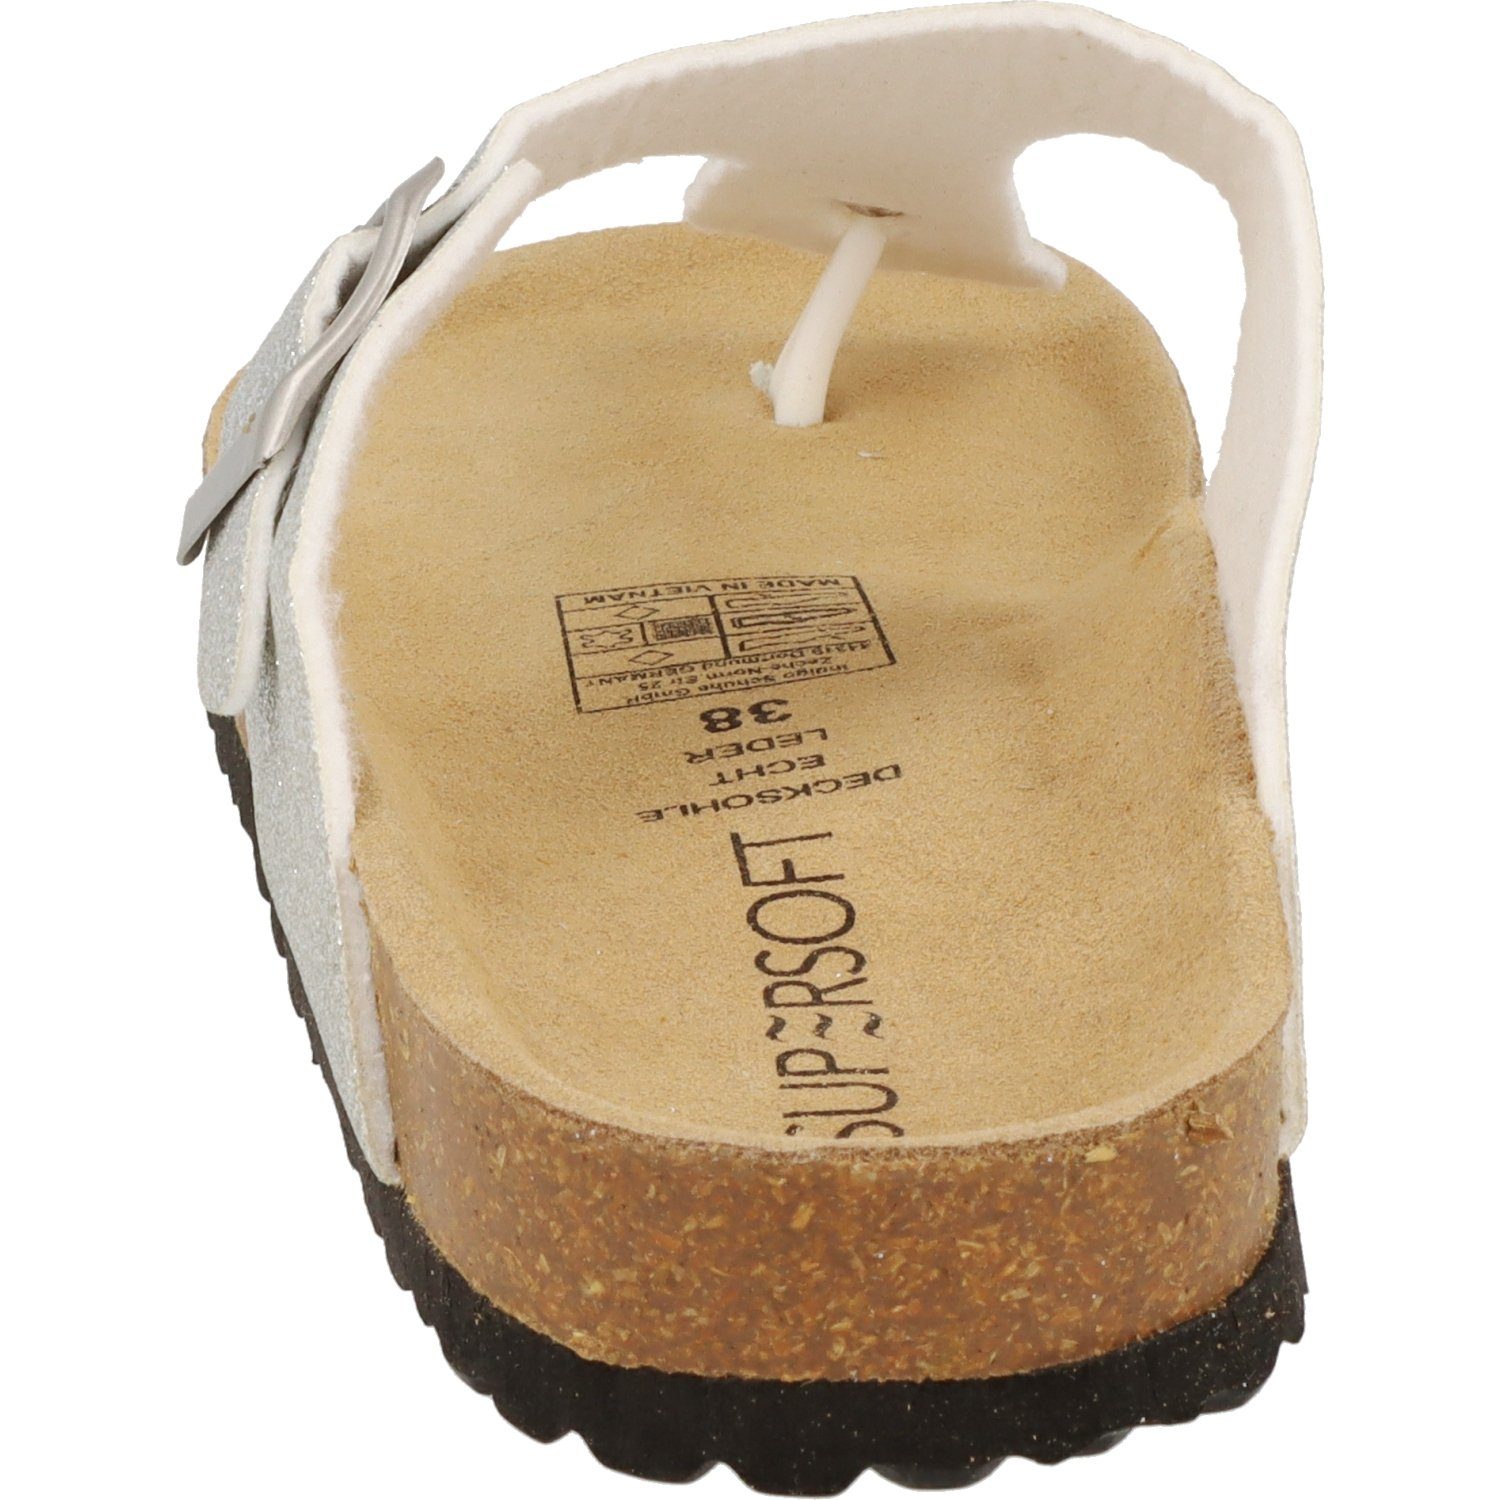 Schuhe Zehentrenner SUPERSOFT 274-518 Damen Zehentrenner Hausschuhe Lederfußbett silber glitzer Zehentrenner